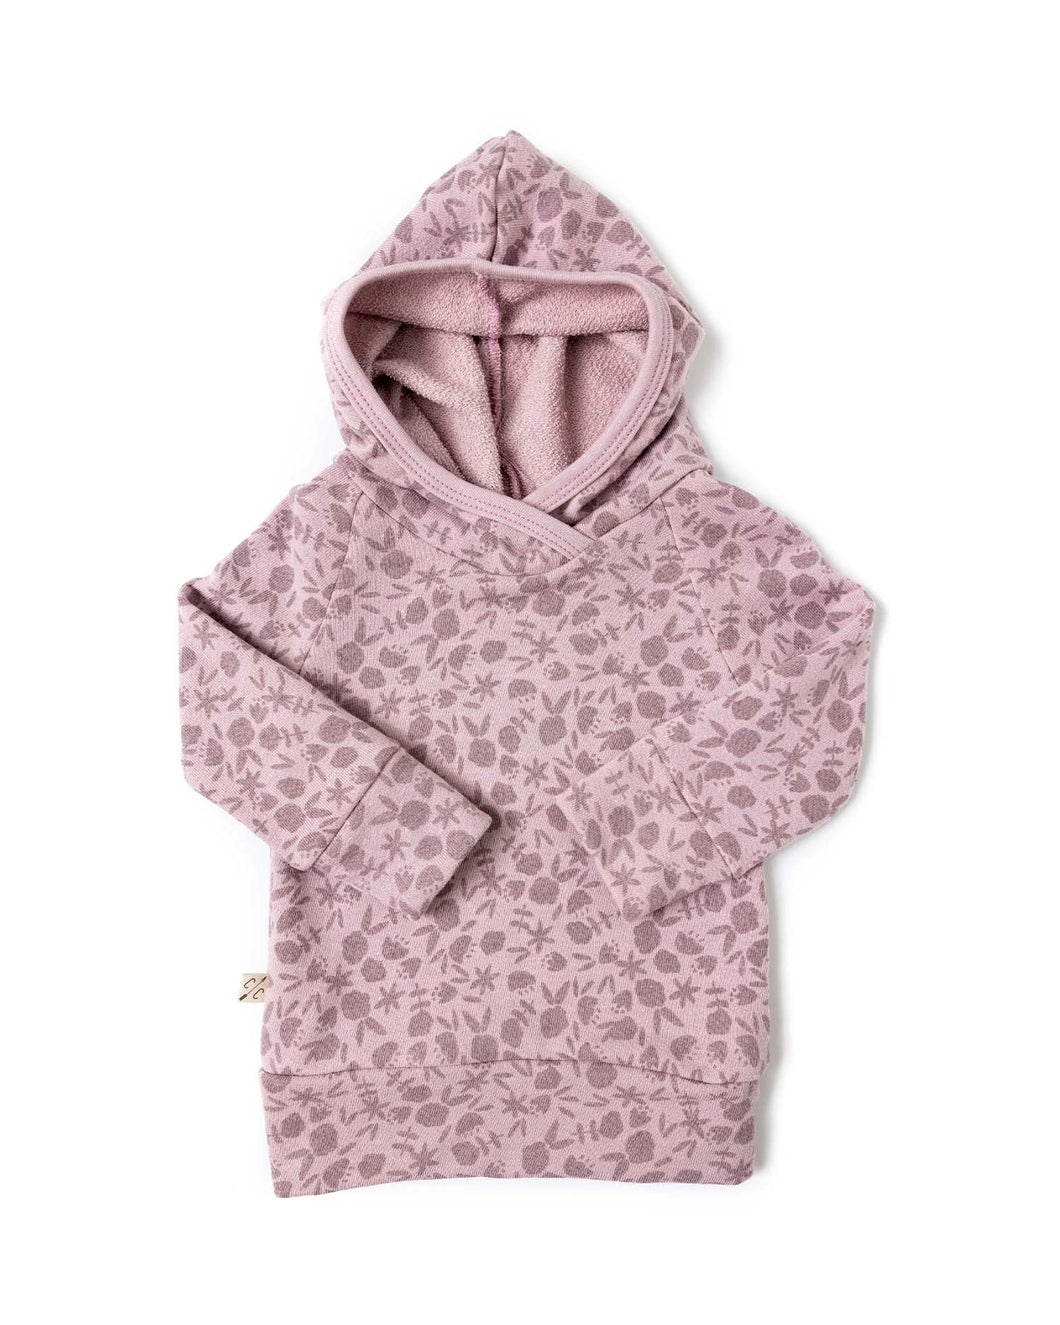 trademark raglan hoodie - ditsy floral on lilac